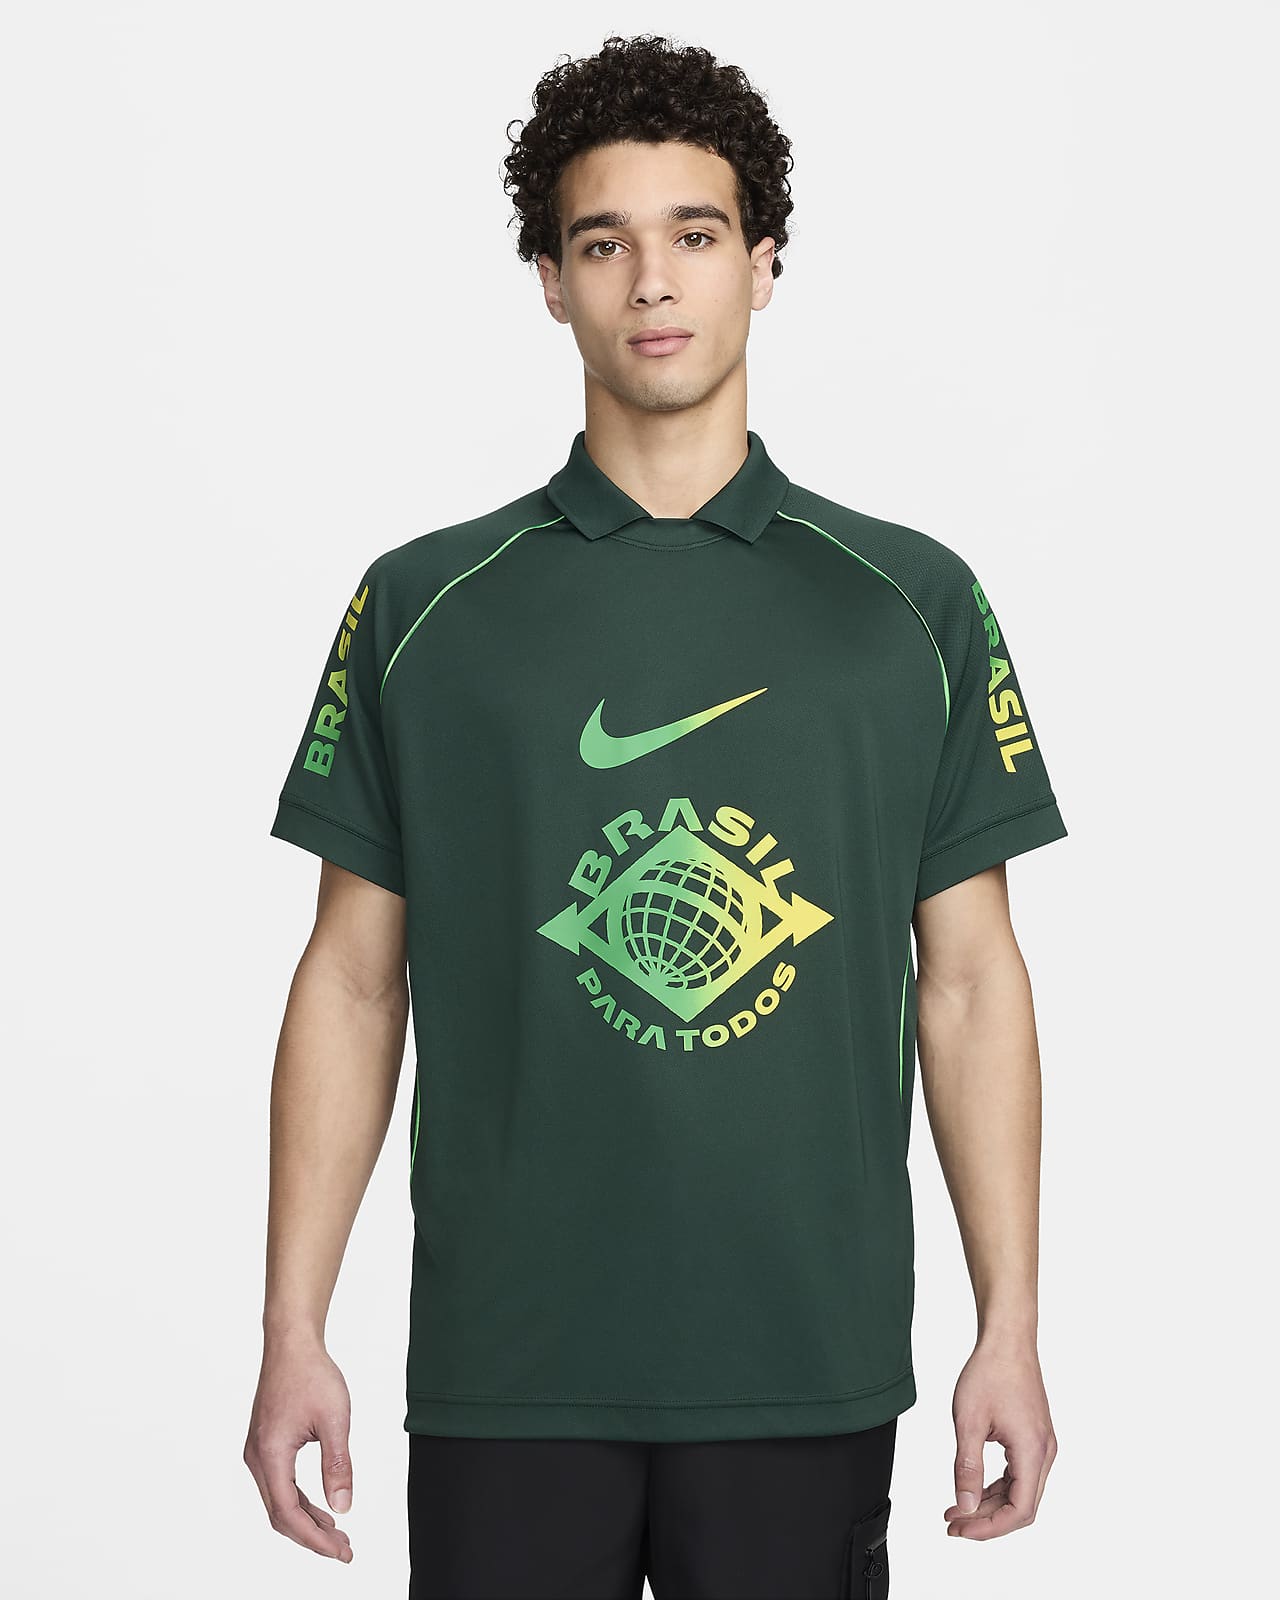 Brazil 男款 Nike Dri-FIT 足球衣